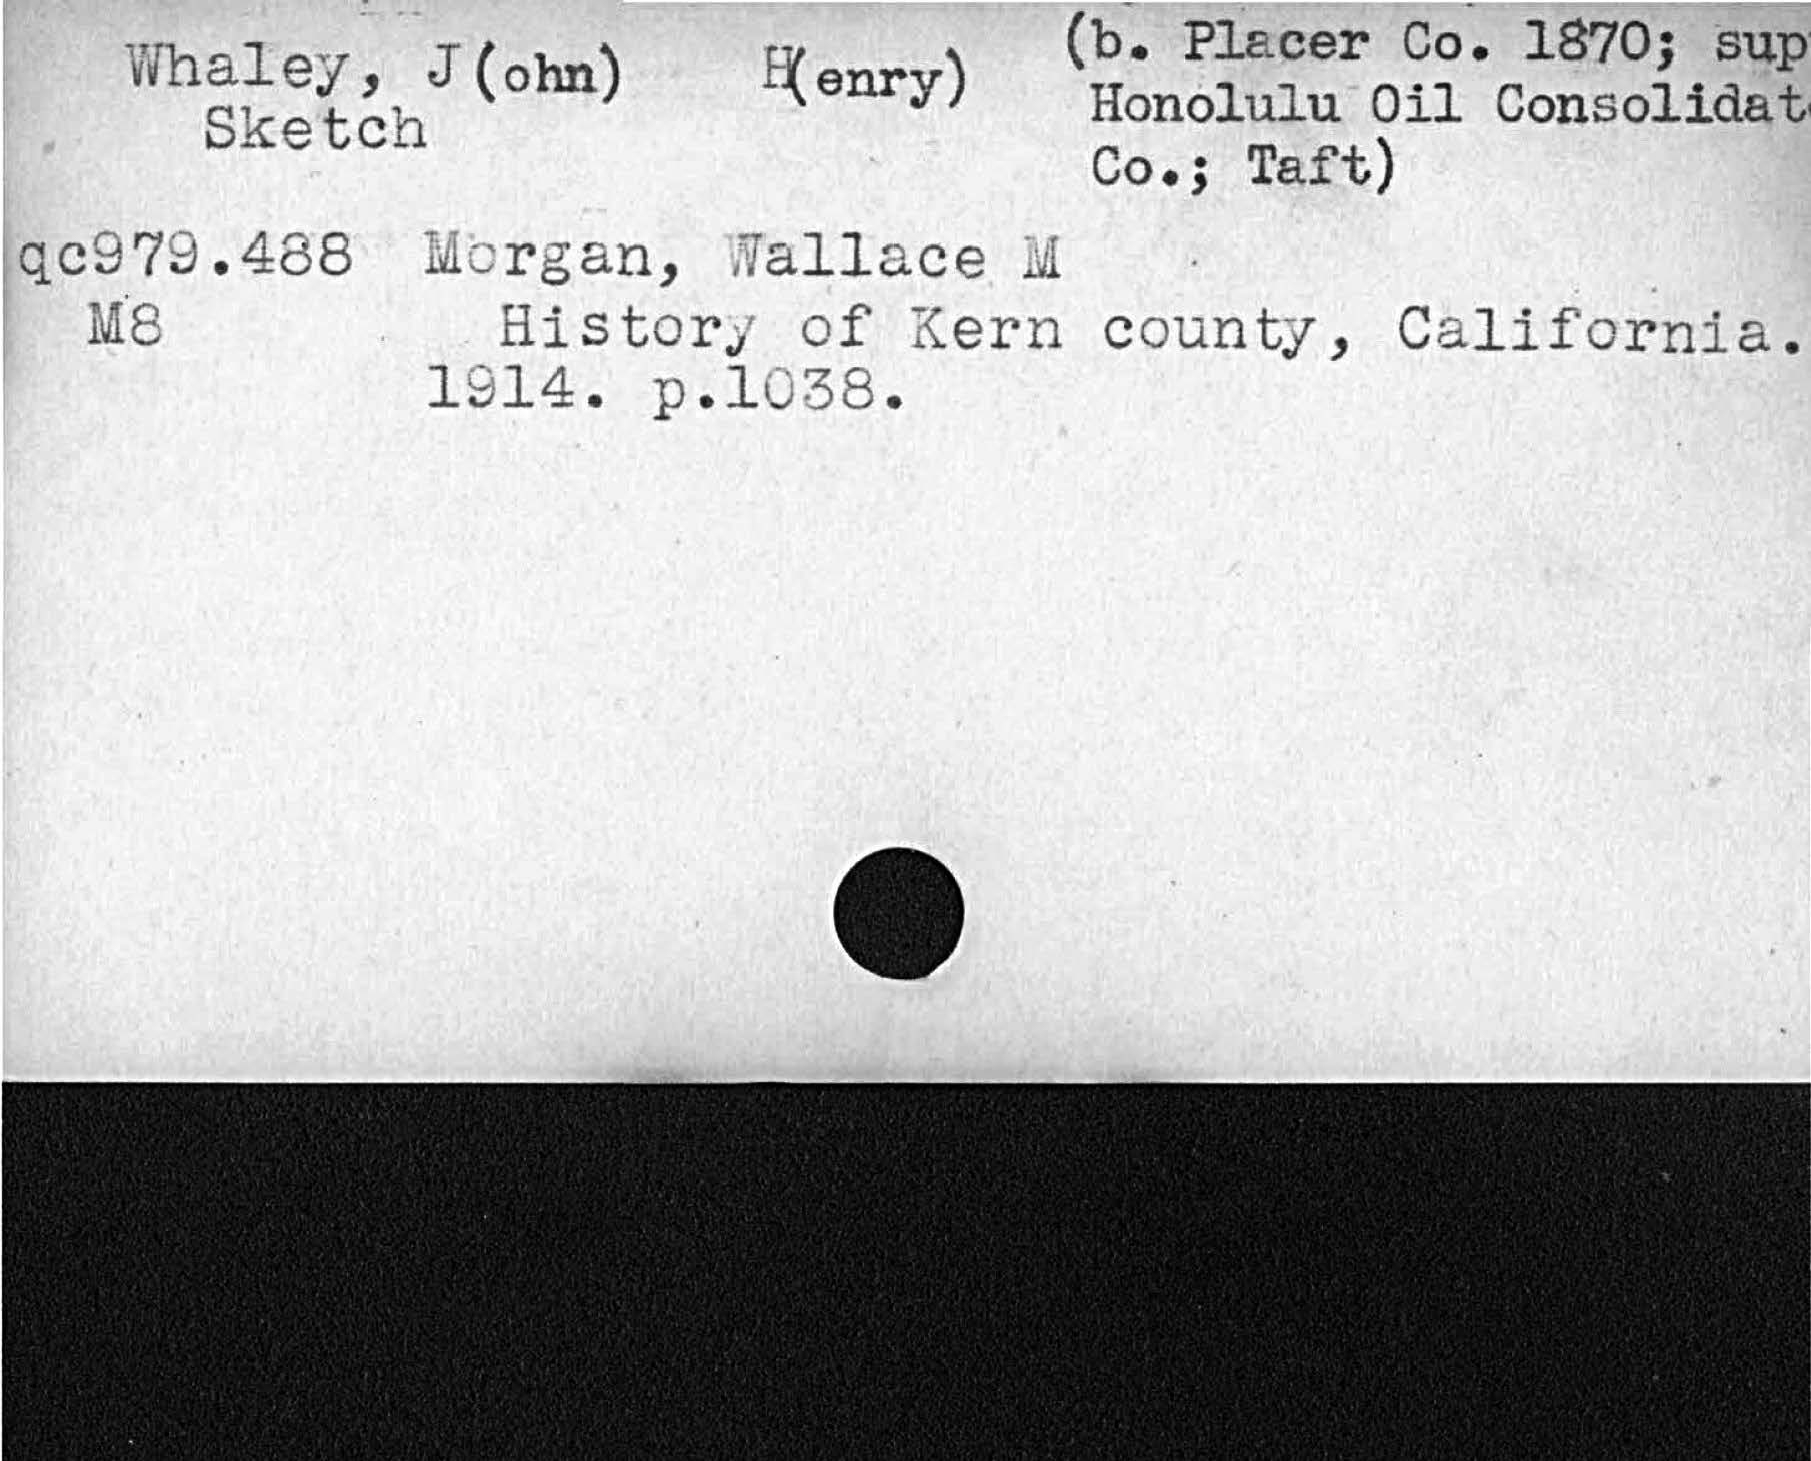 b. Placer Co. 1870; supWhaley John HenryHonolulu Oil ConsolidateSketchCo. TaftMorgan, Wallace MHistory of Kern county, California.1 914 p. l 38   qc979. 488